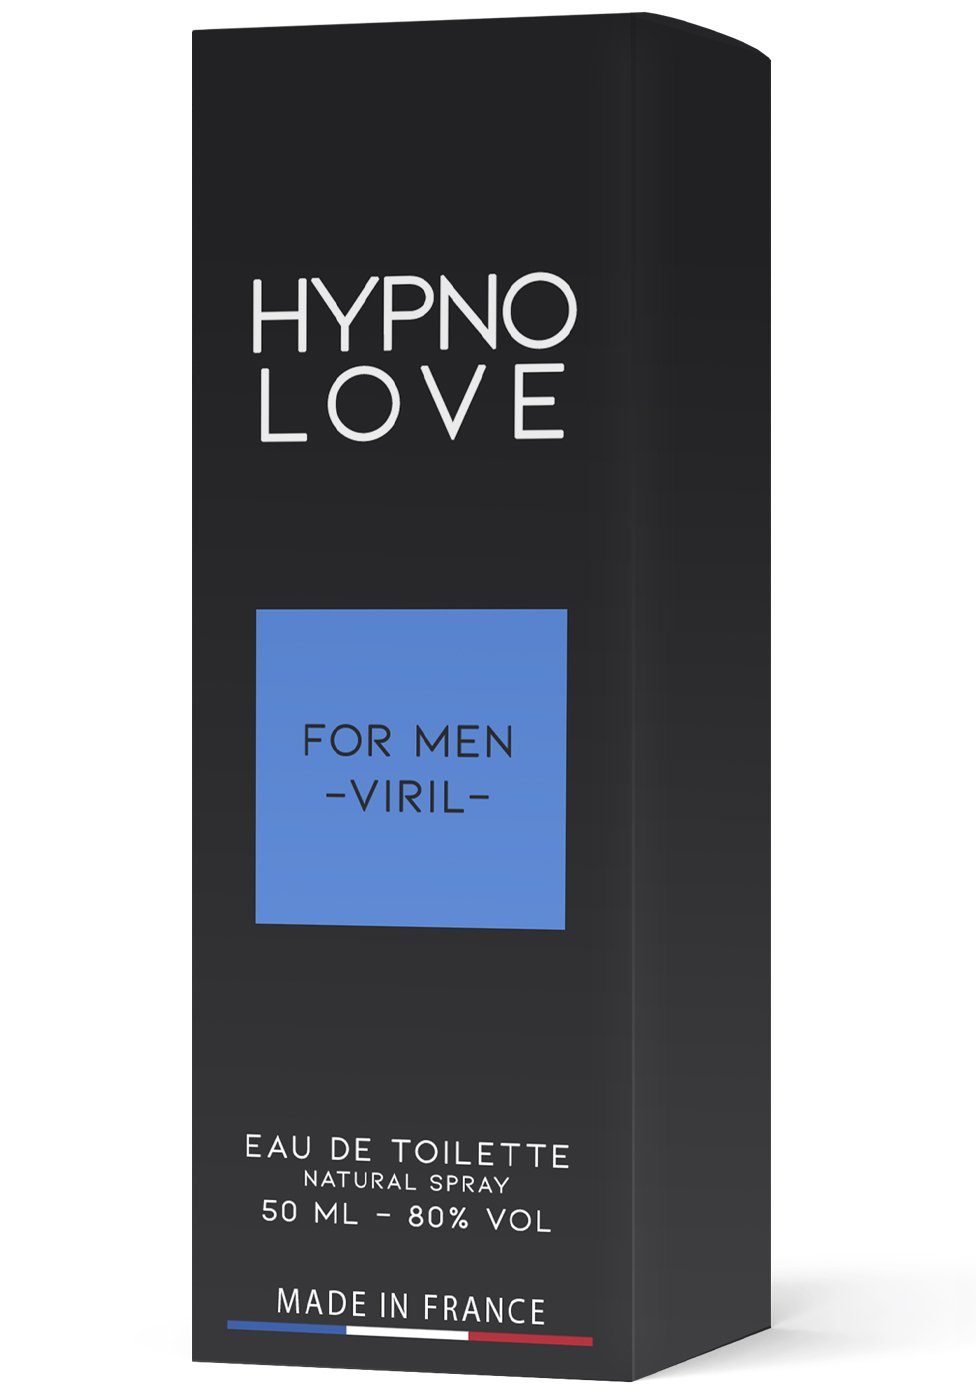 Ruf Men for Parfum de Hypno-Love Parfum Eau